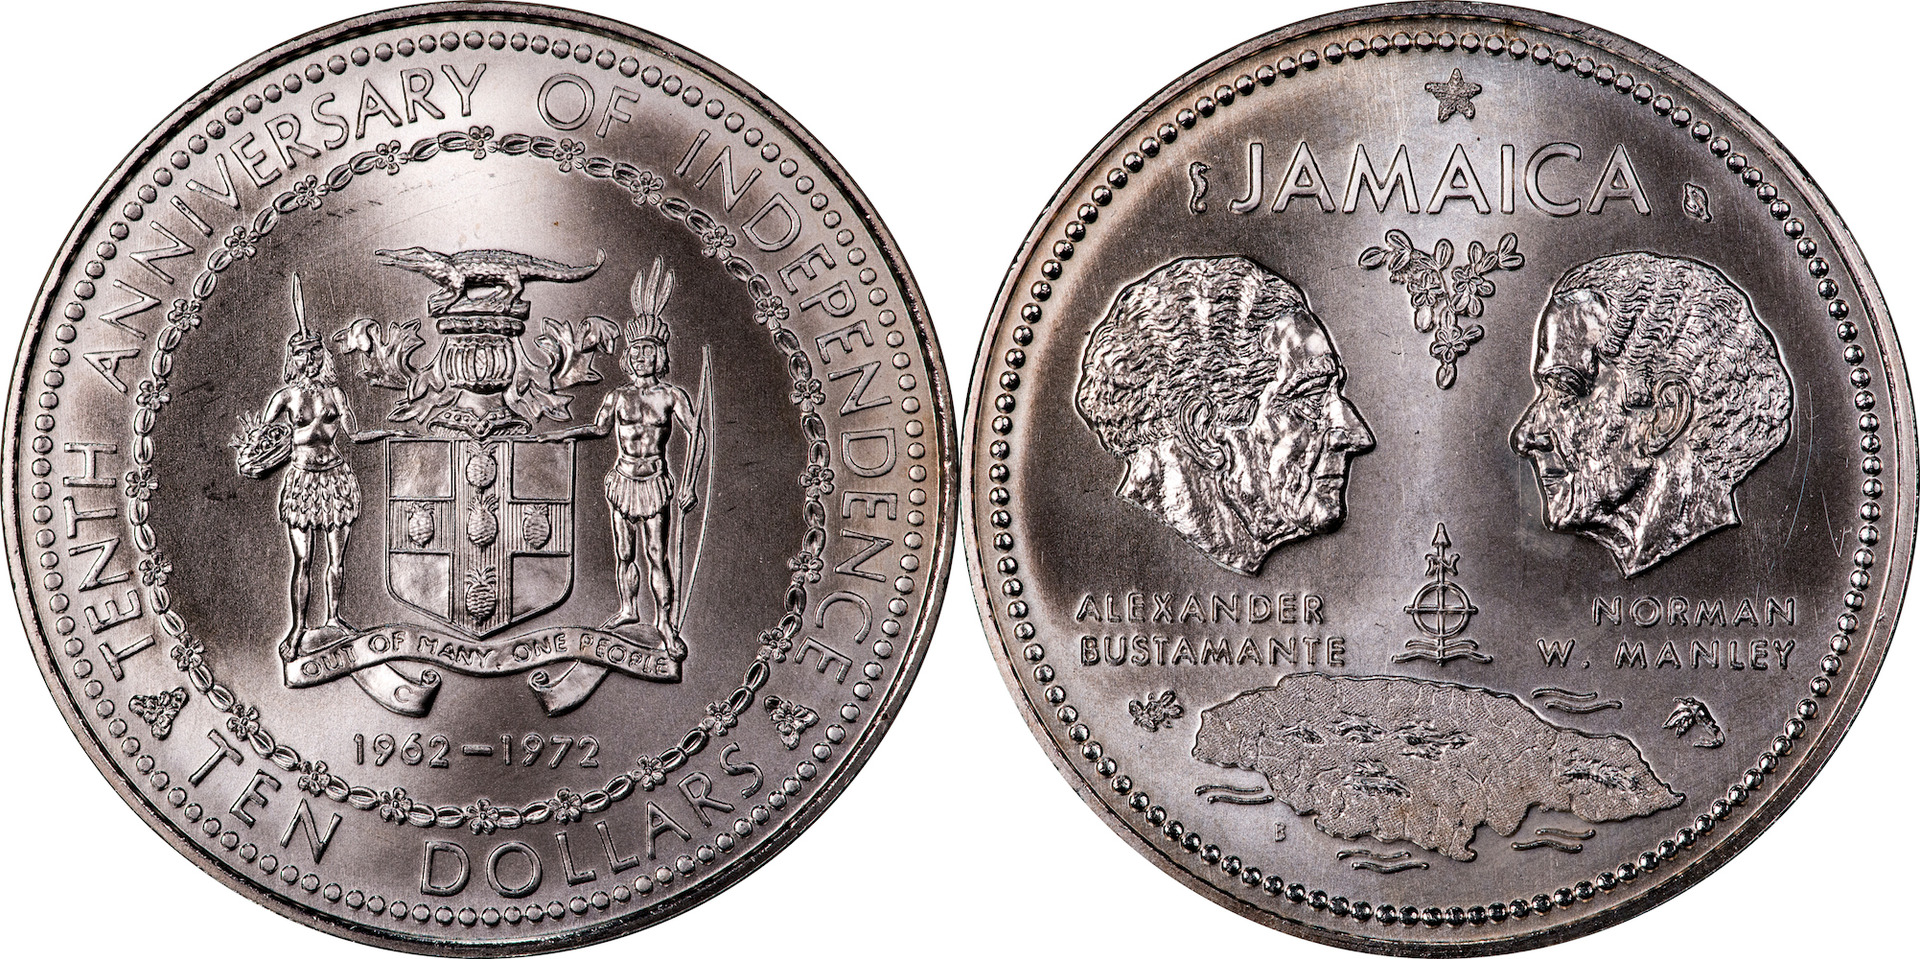 Jamaica - 1972 Ten Dollars copy.jpg